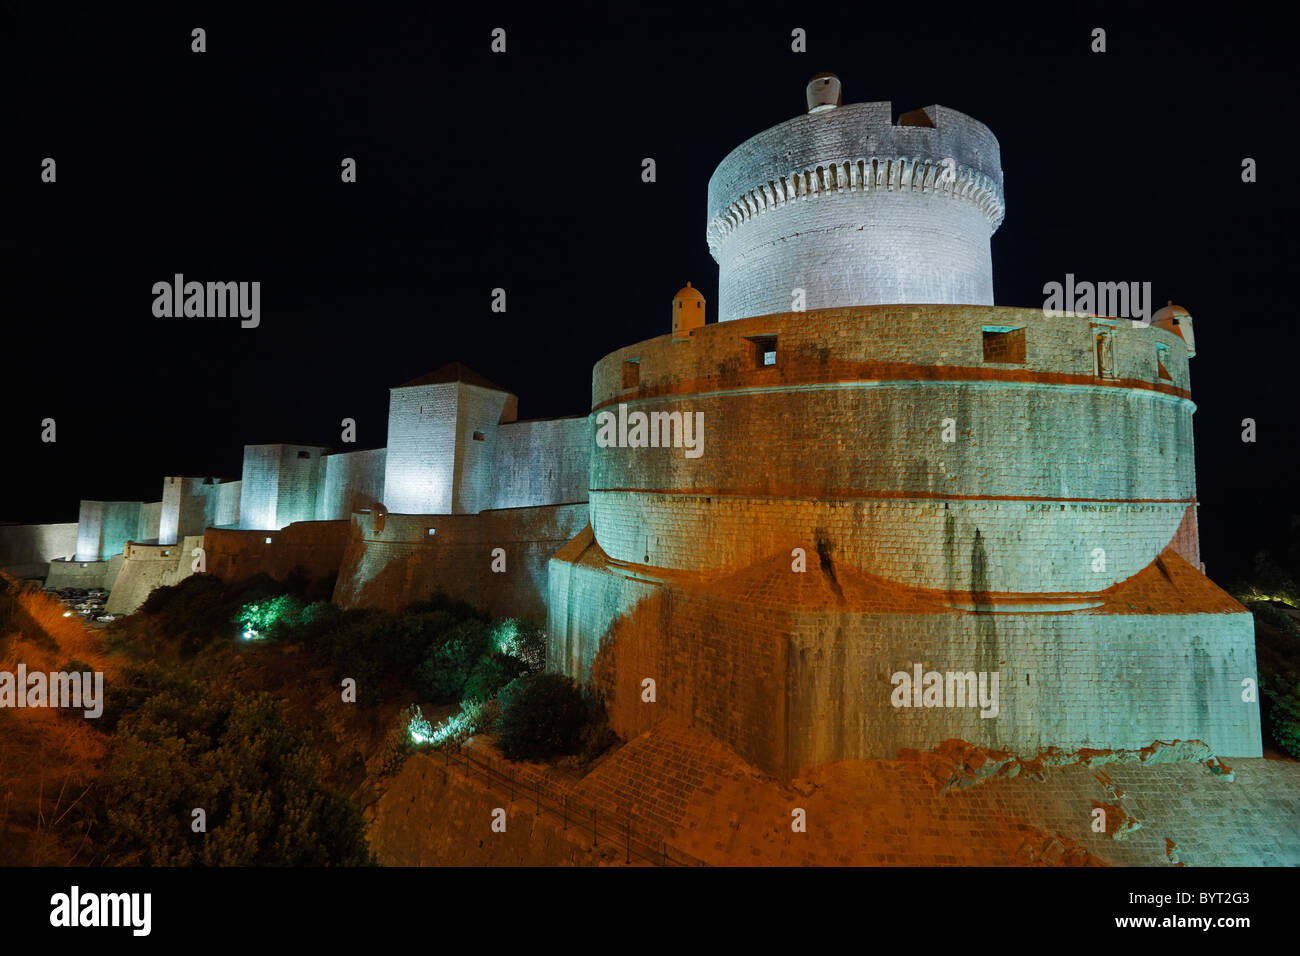 City walls by night, Dubrovnik, Croatia, heritage Stock Photo